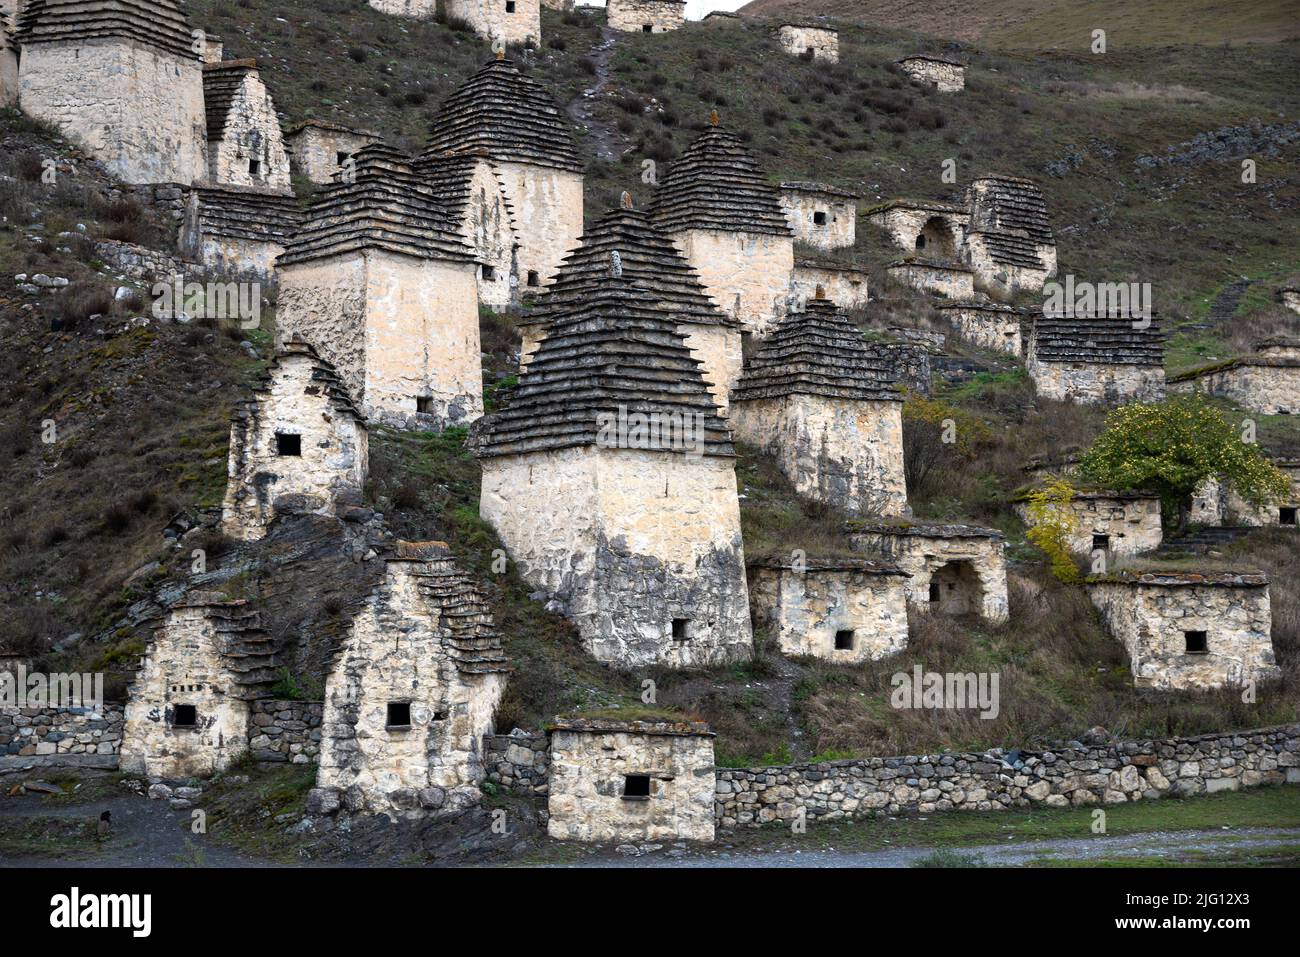 Ancient burial complex Dargavs. North Ossetia, Russia Stock Photo